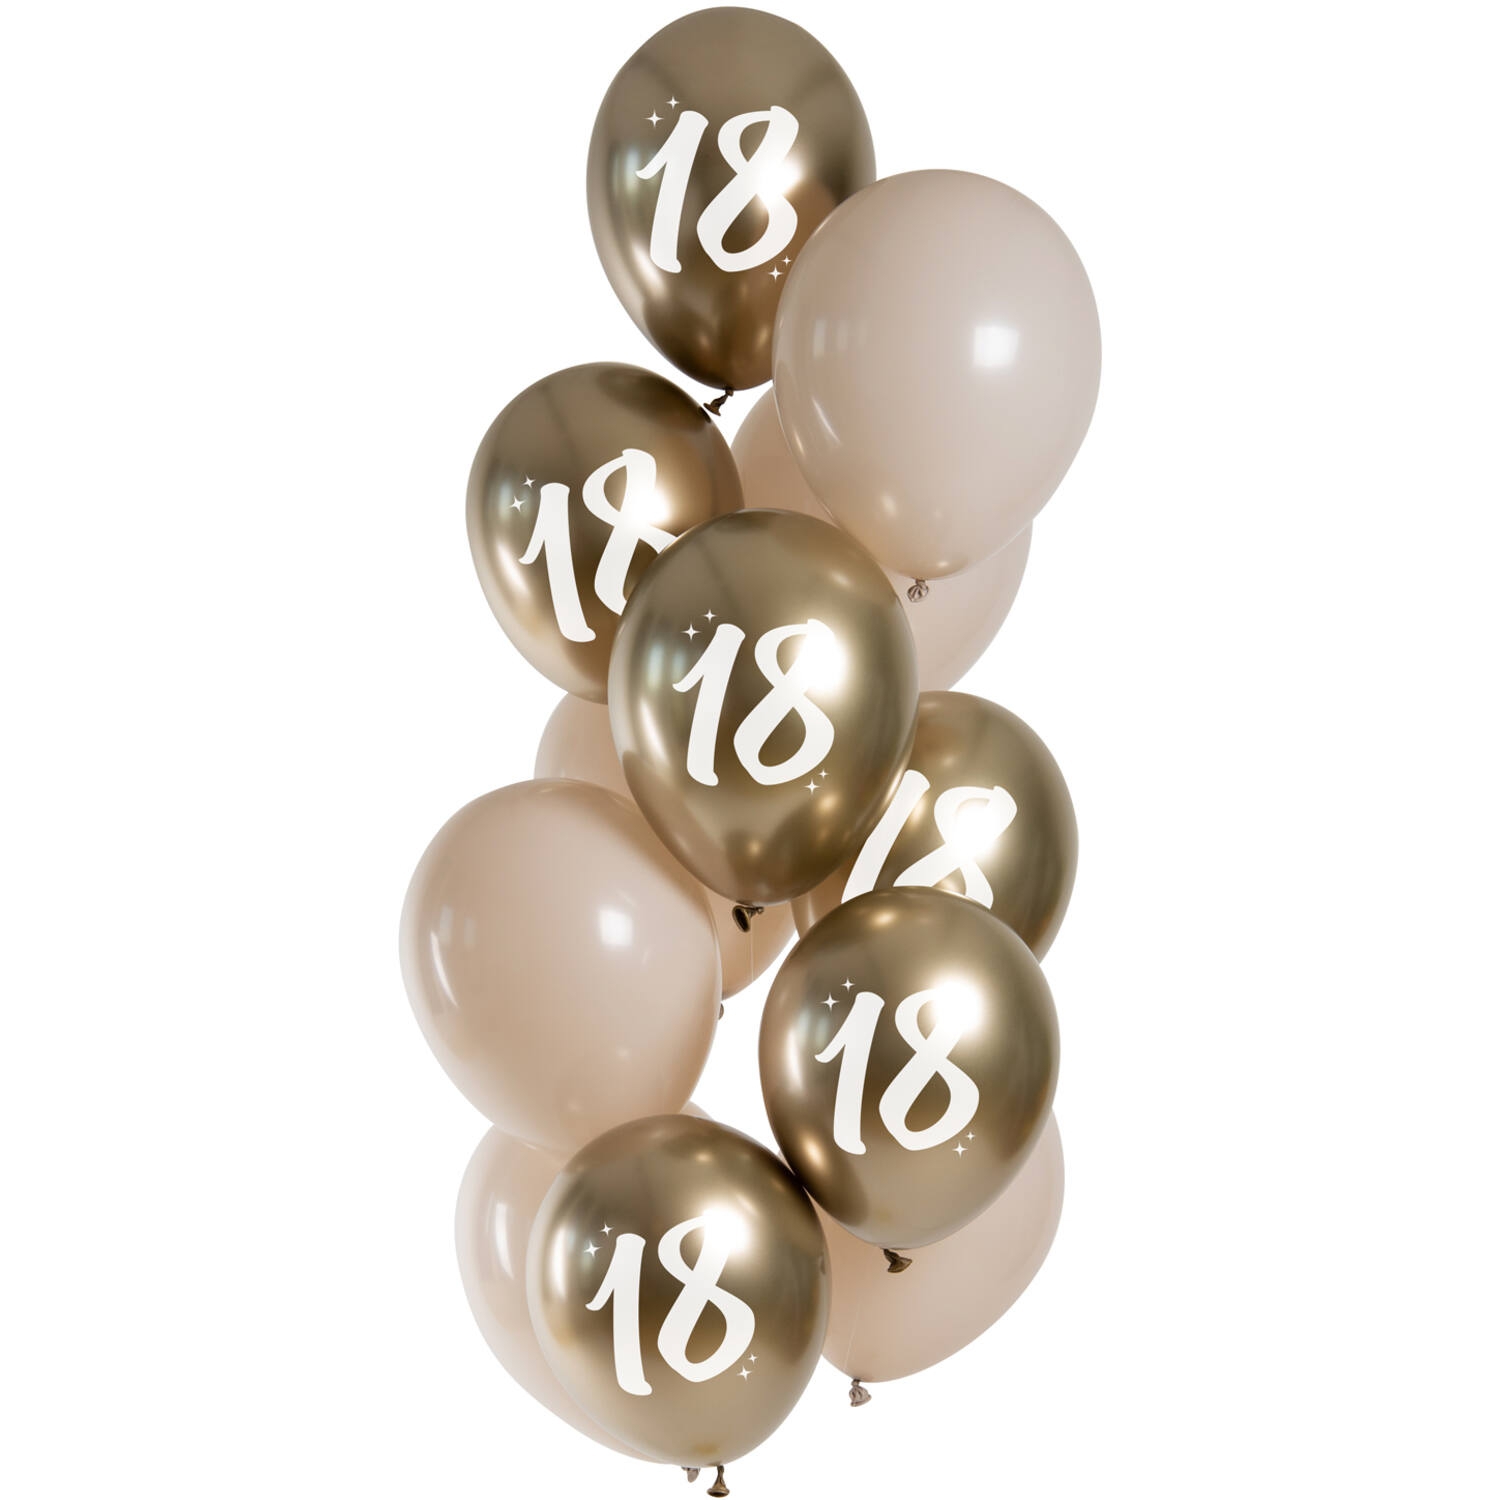 12 Latexballons im Set "Golden Latte 18 Jahre" Ø 33cm